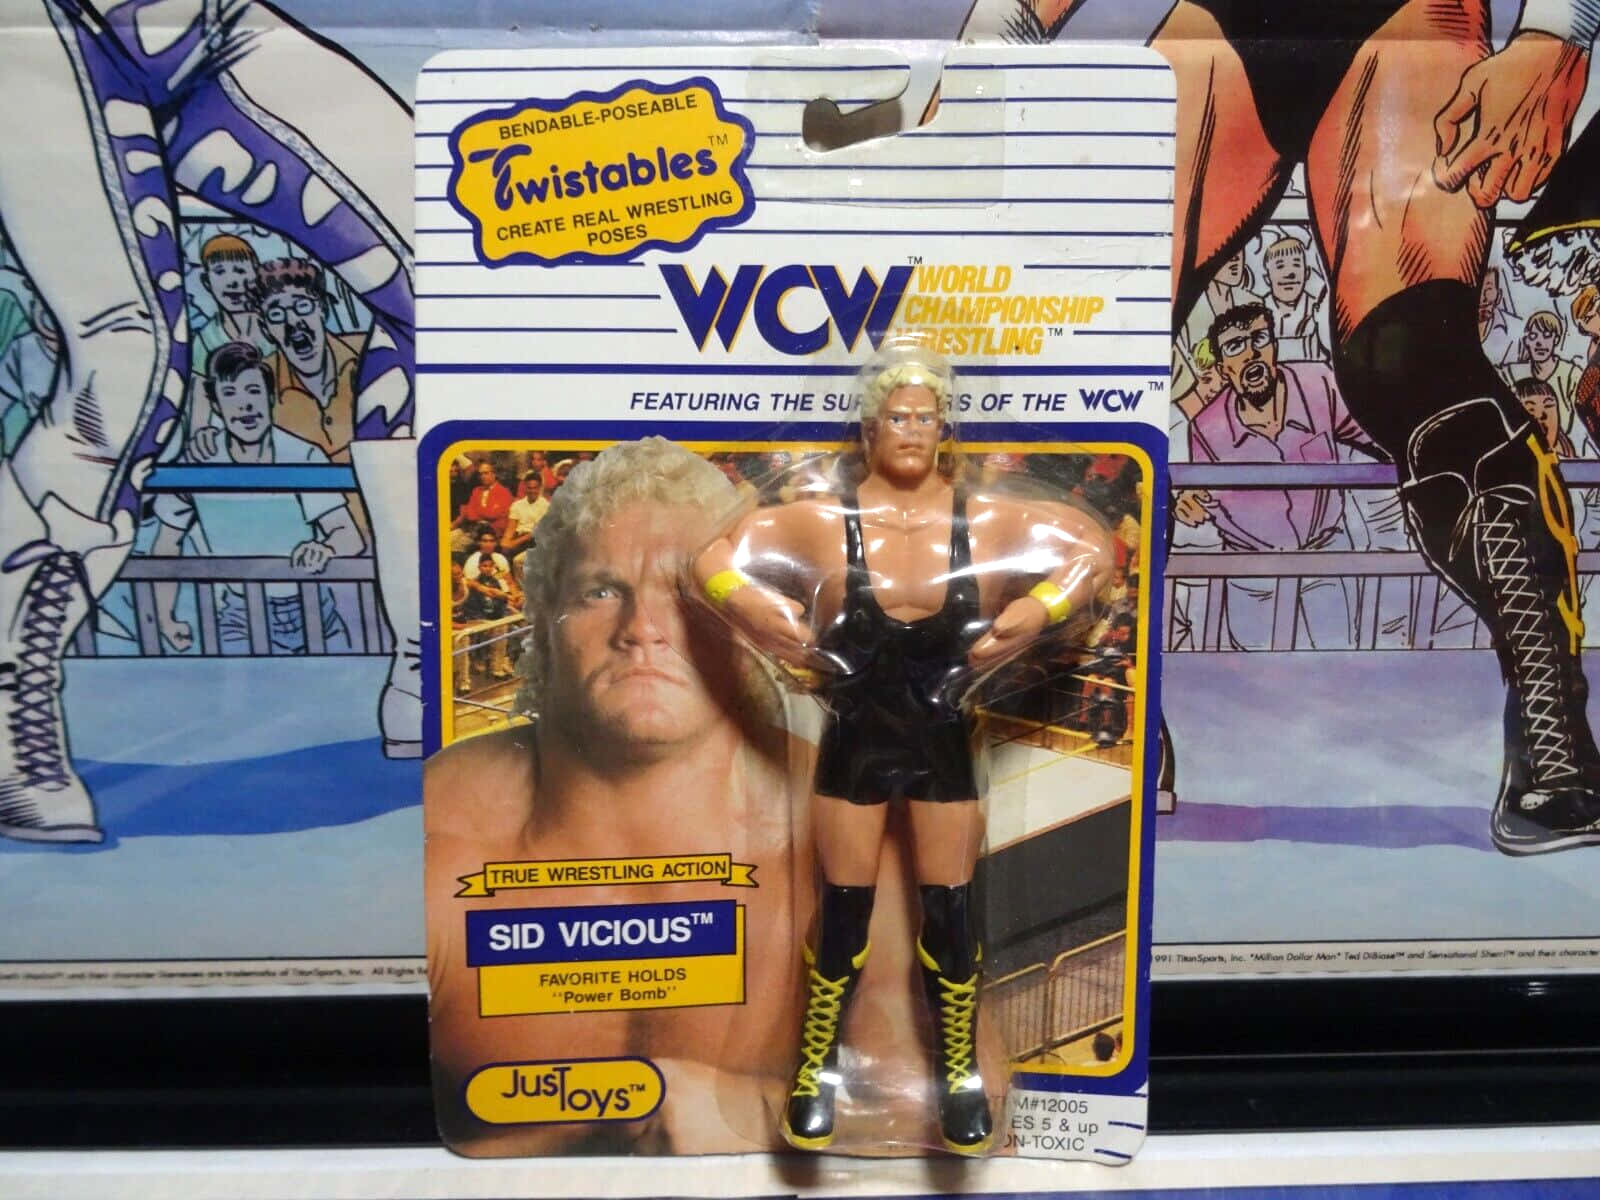 Legetøj Figur af WCW Wrestler Sid Vicious Wallpaper